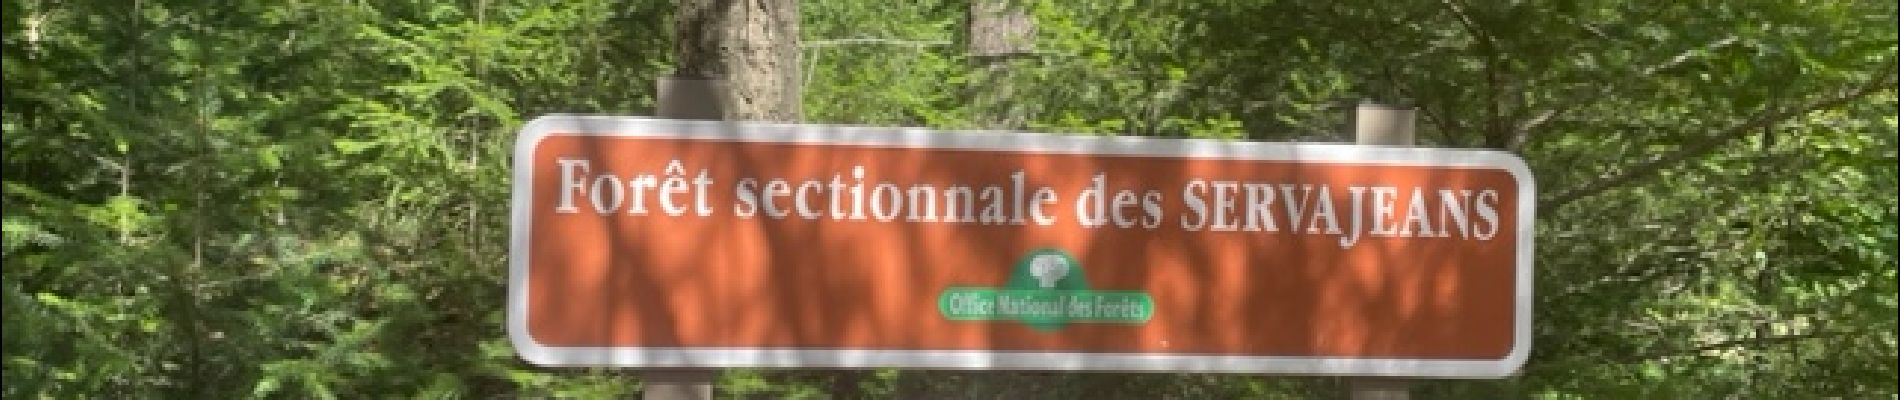 Punto di interesse Ambierle - Forêt sectionale des Servajeans - Photo